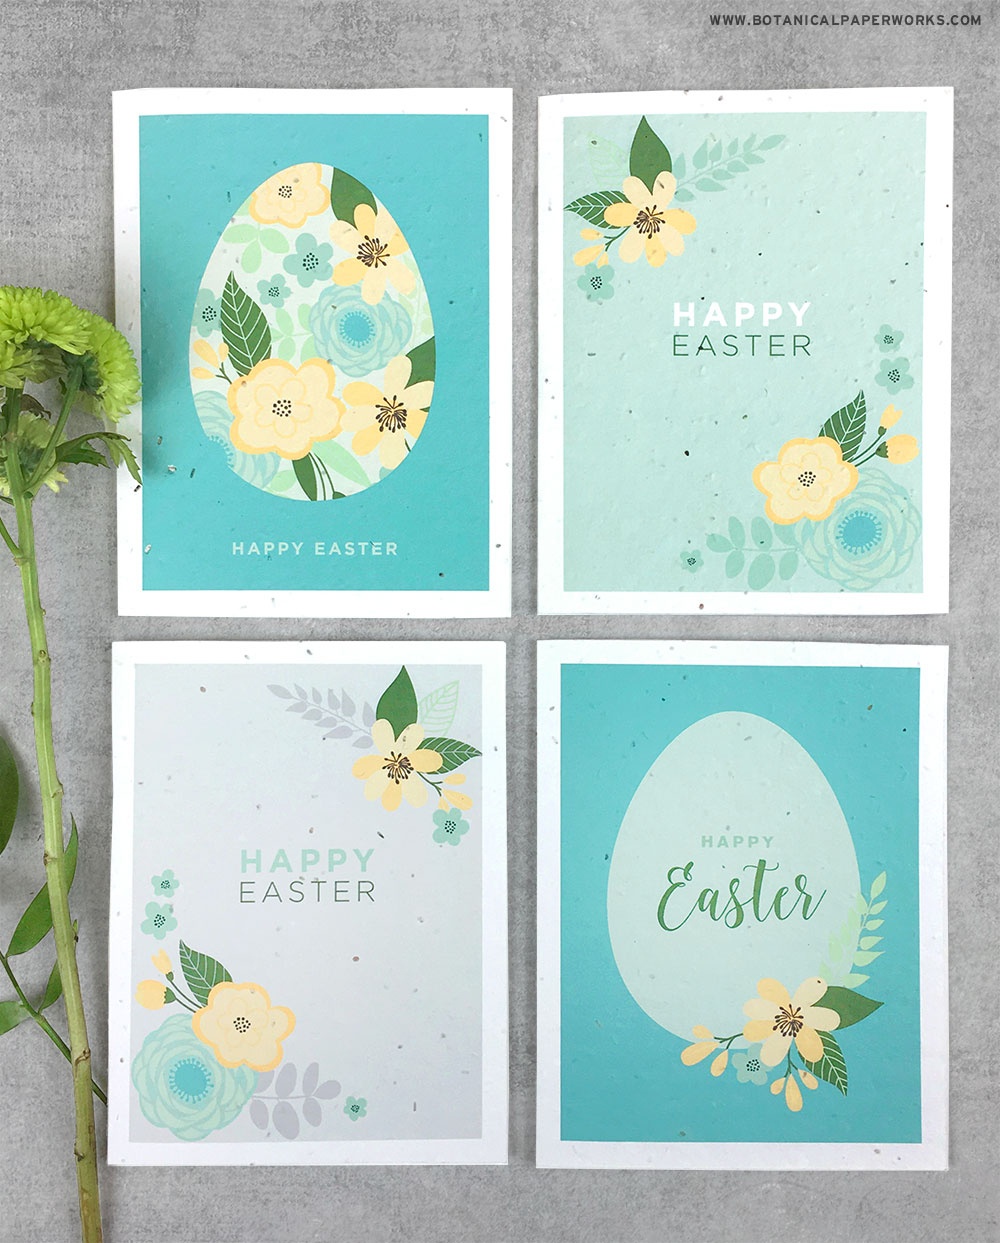 Free Printable} Easter Cards | Blog | Botanical Paperworks - Free Printable Easter Greeting Cards